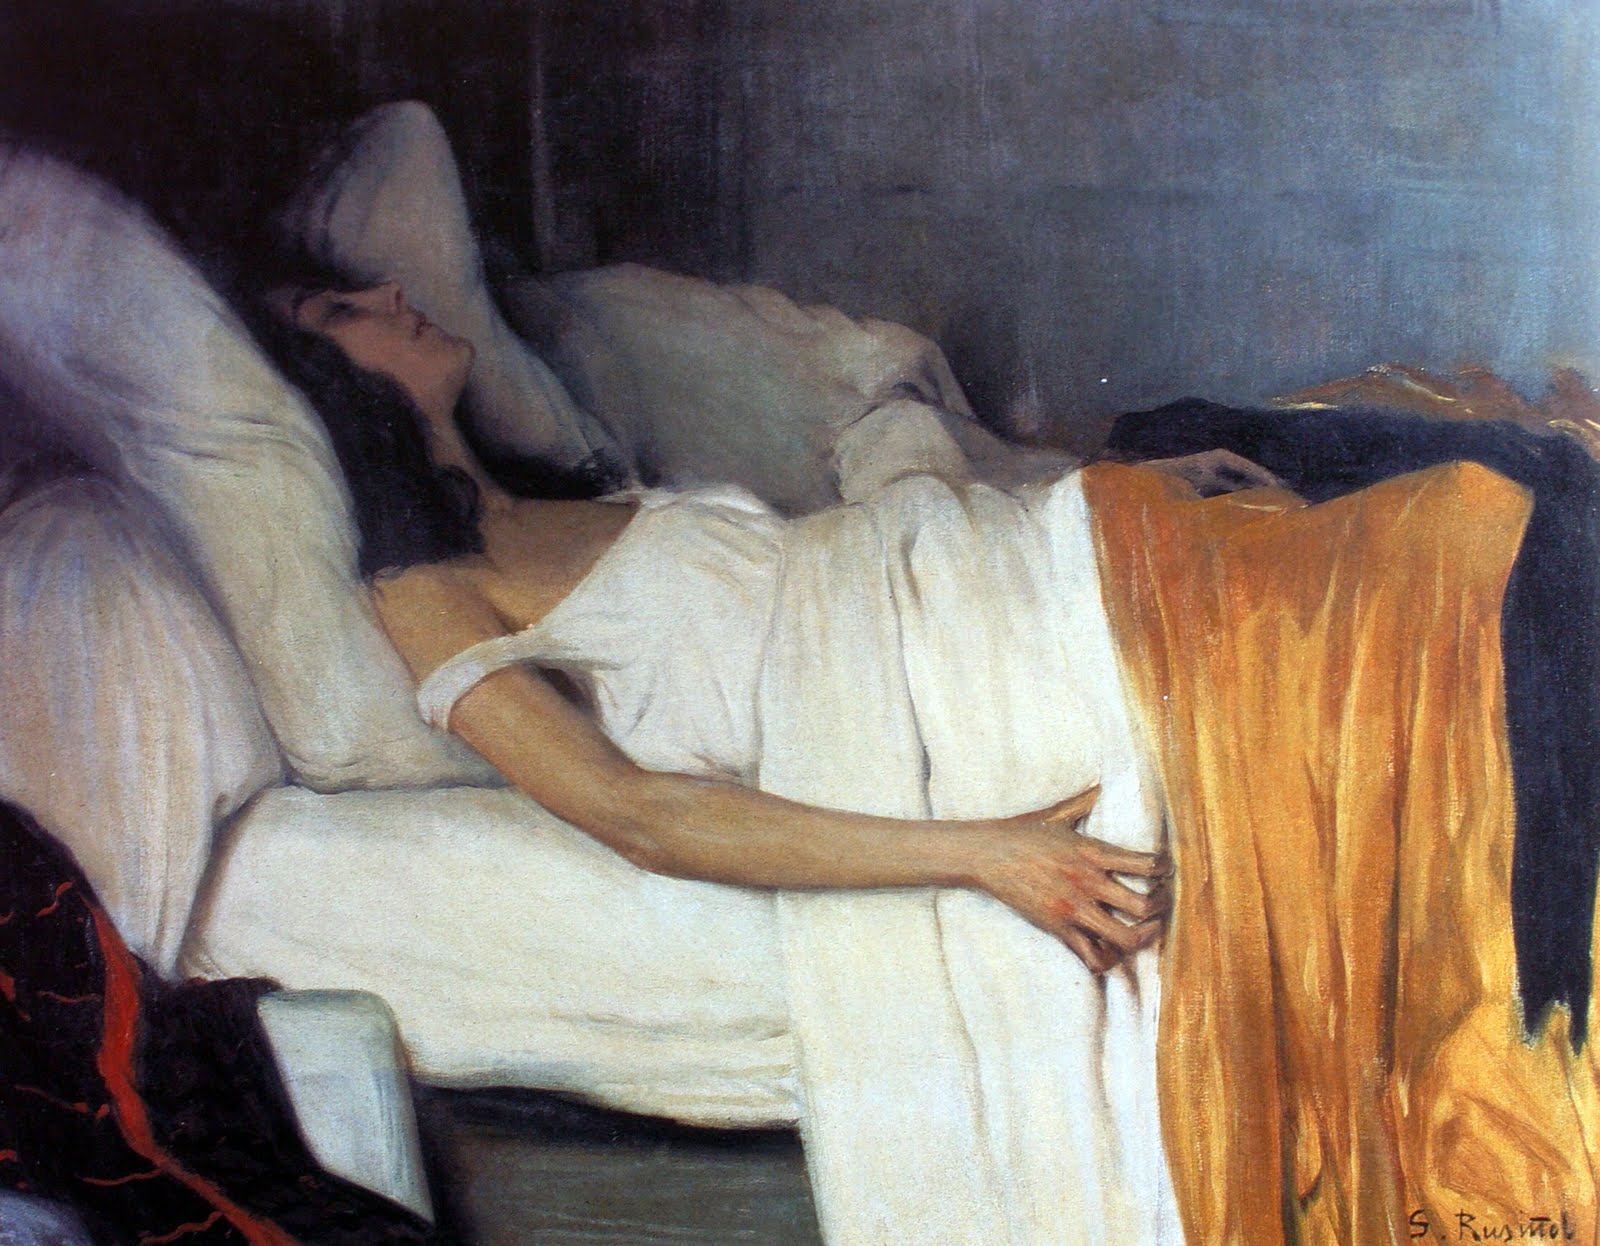 The Morphine's Girl by Santiago Rusiñol - 1894 - 87.8 x 115.2 cm Museu del Cau Ferrat